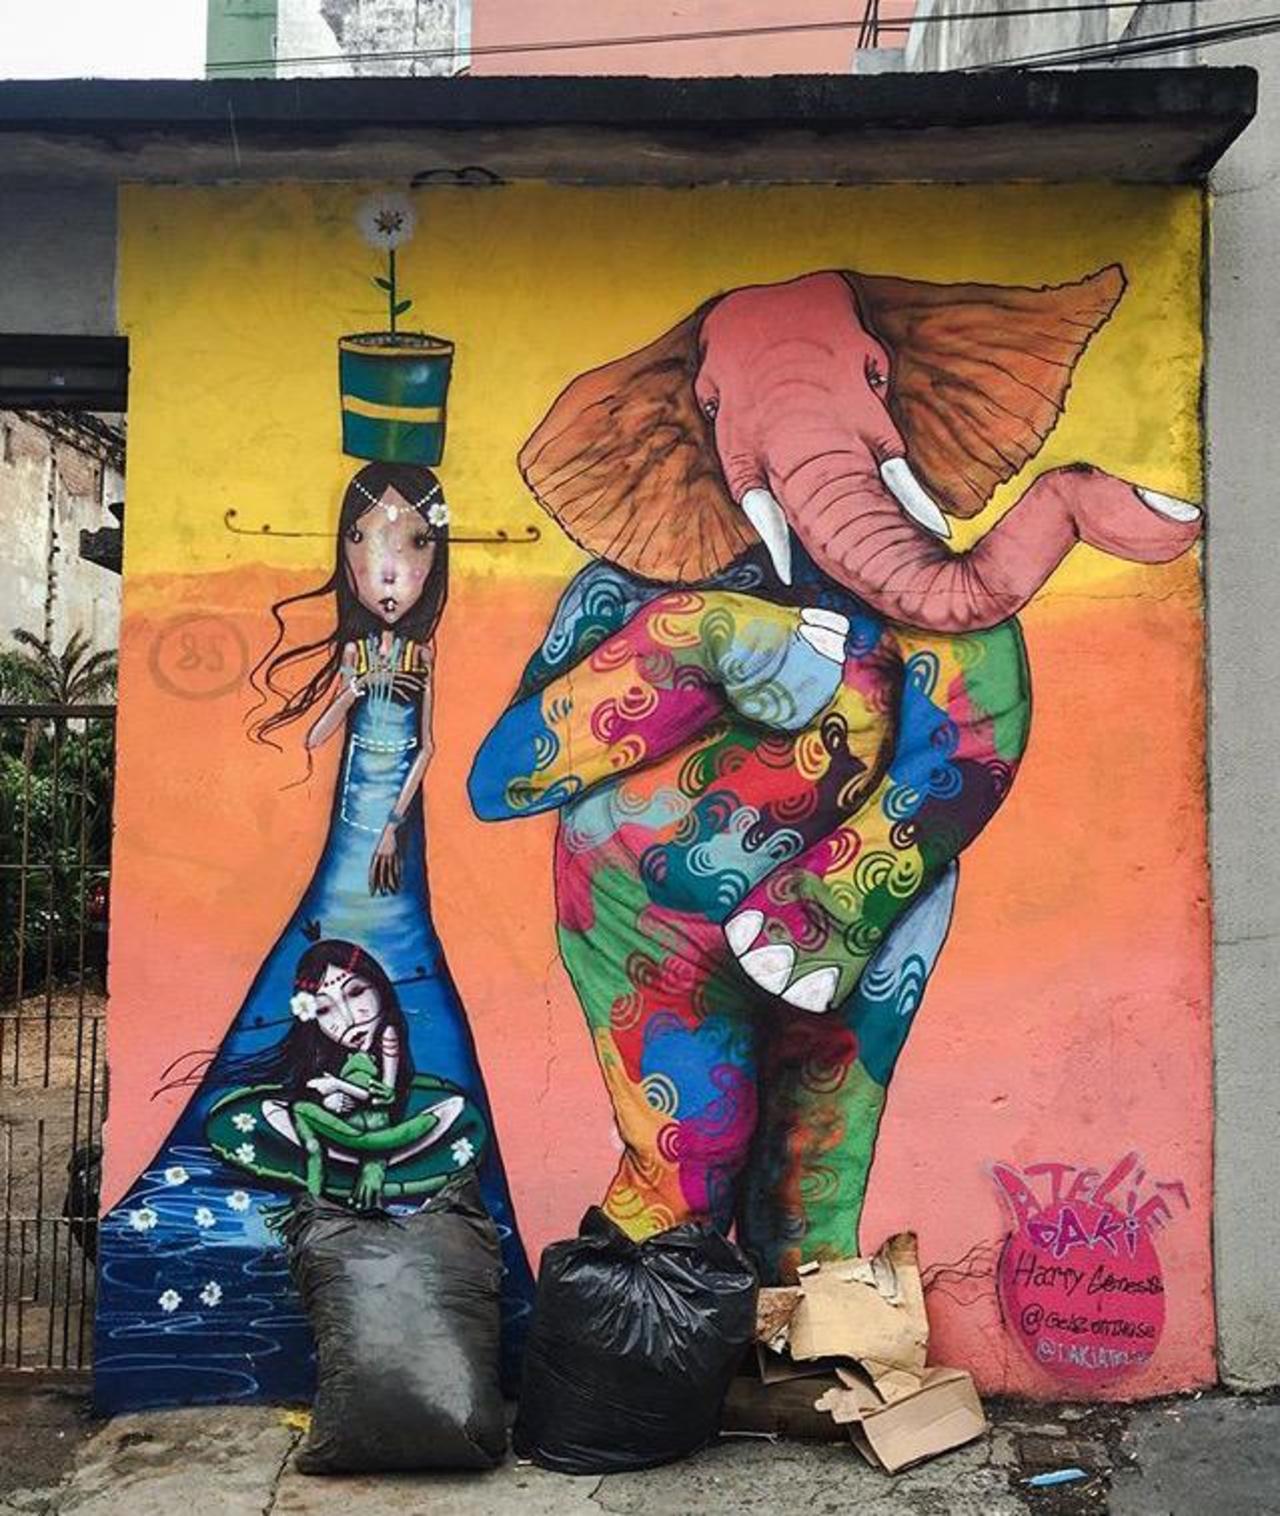 Street Art by Harry Geneis & Gelson in São Paulo #art #mural #graffiti #streetart http://t.co/SlLbhuMZfD … … …… … http://twitter.com/charlesjackso14/status/648021500637921280